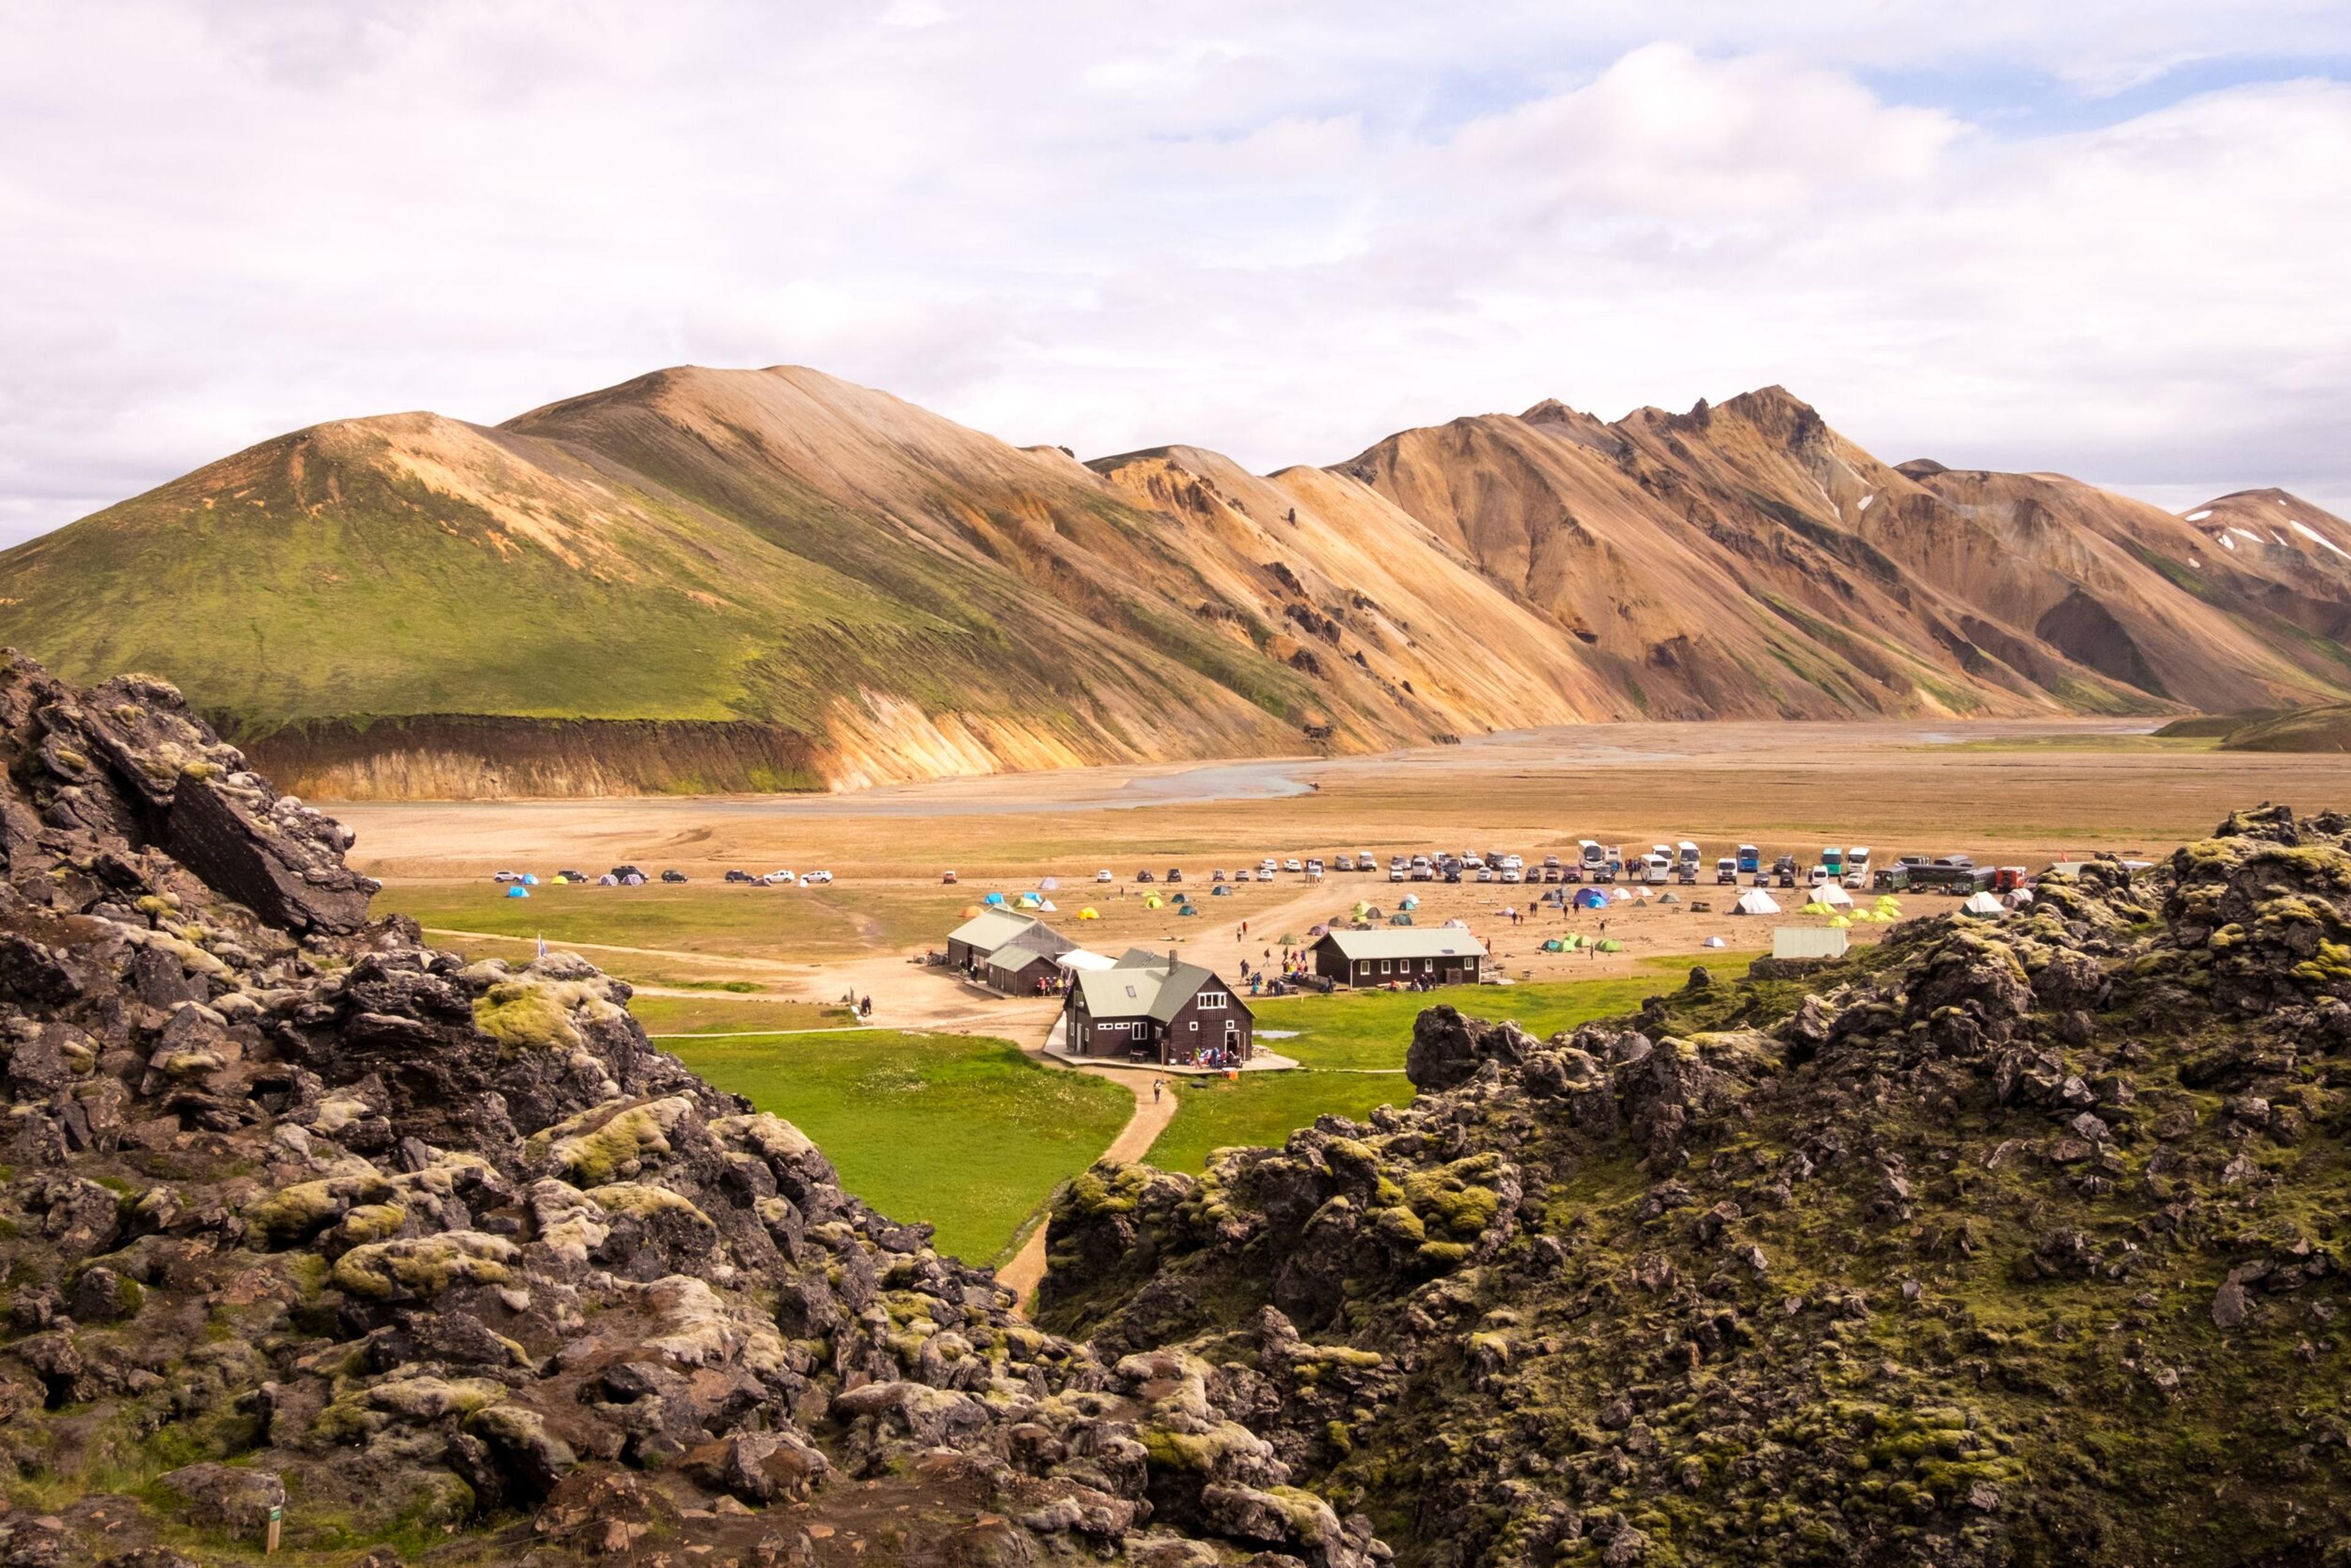 Landmannalaugar camp site in the Highlands of Iceland.